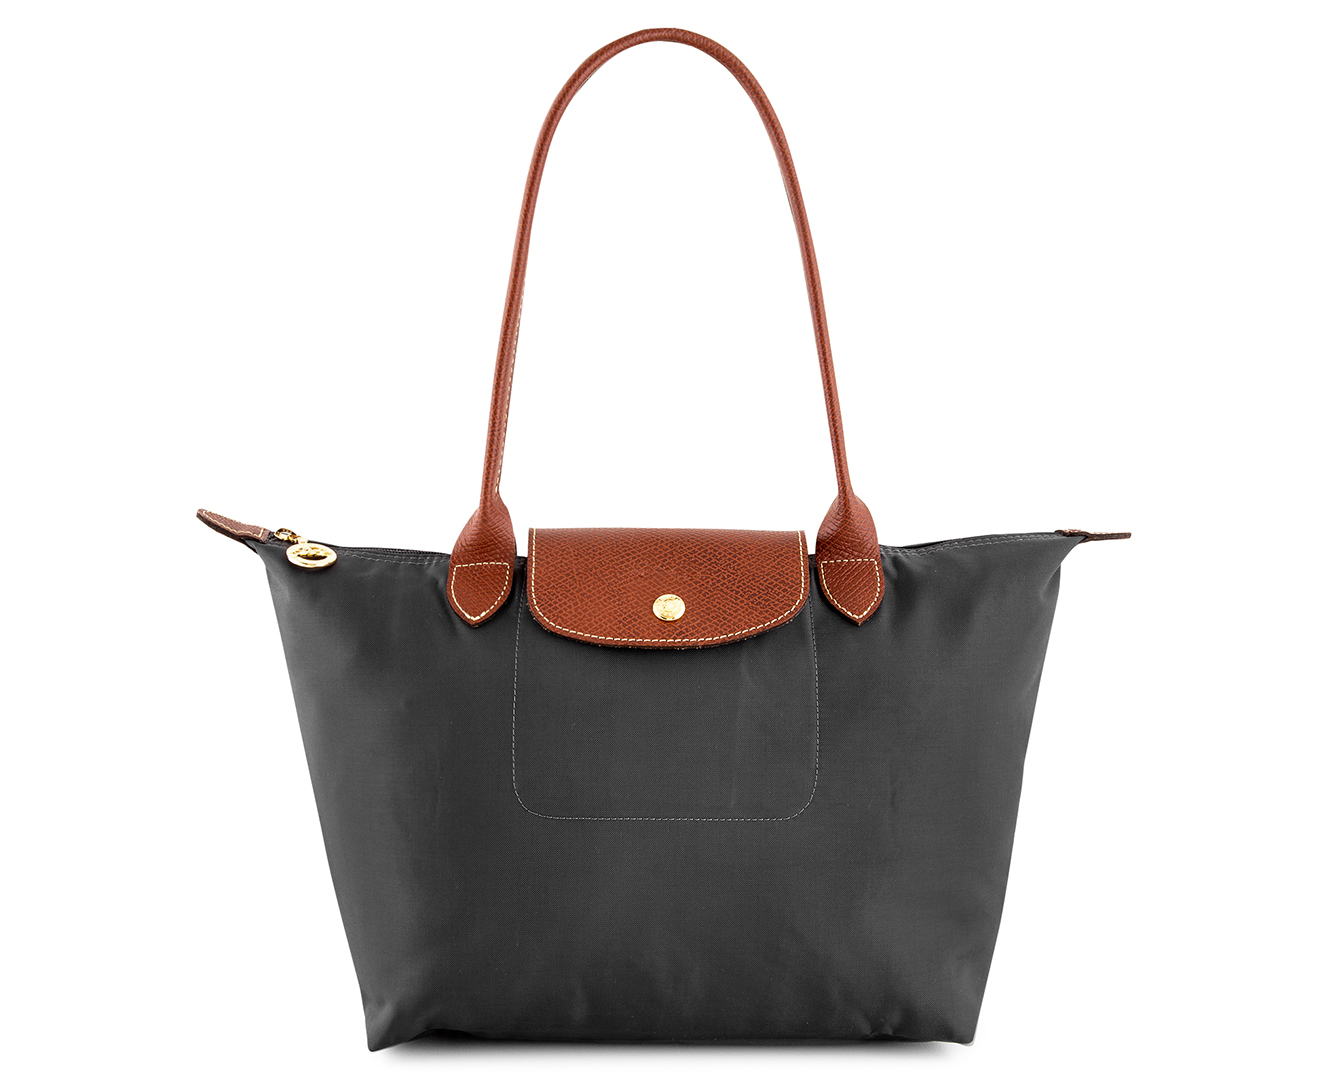 Longchamp Small Le Pliage Tote Bag - Gunmetal | Catch.com.au